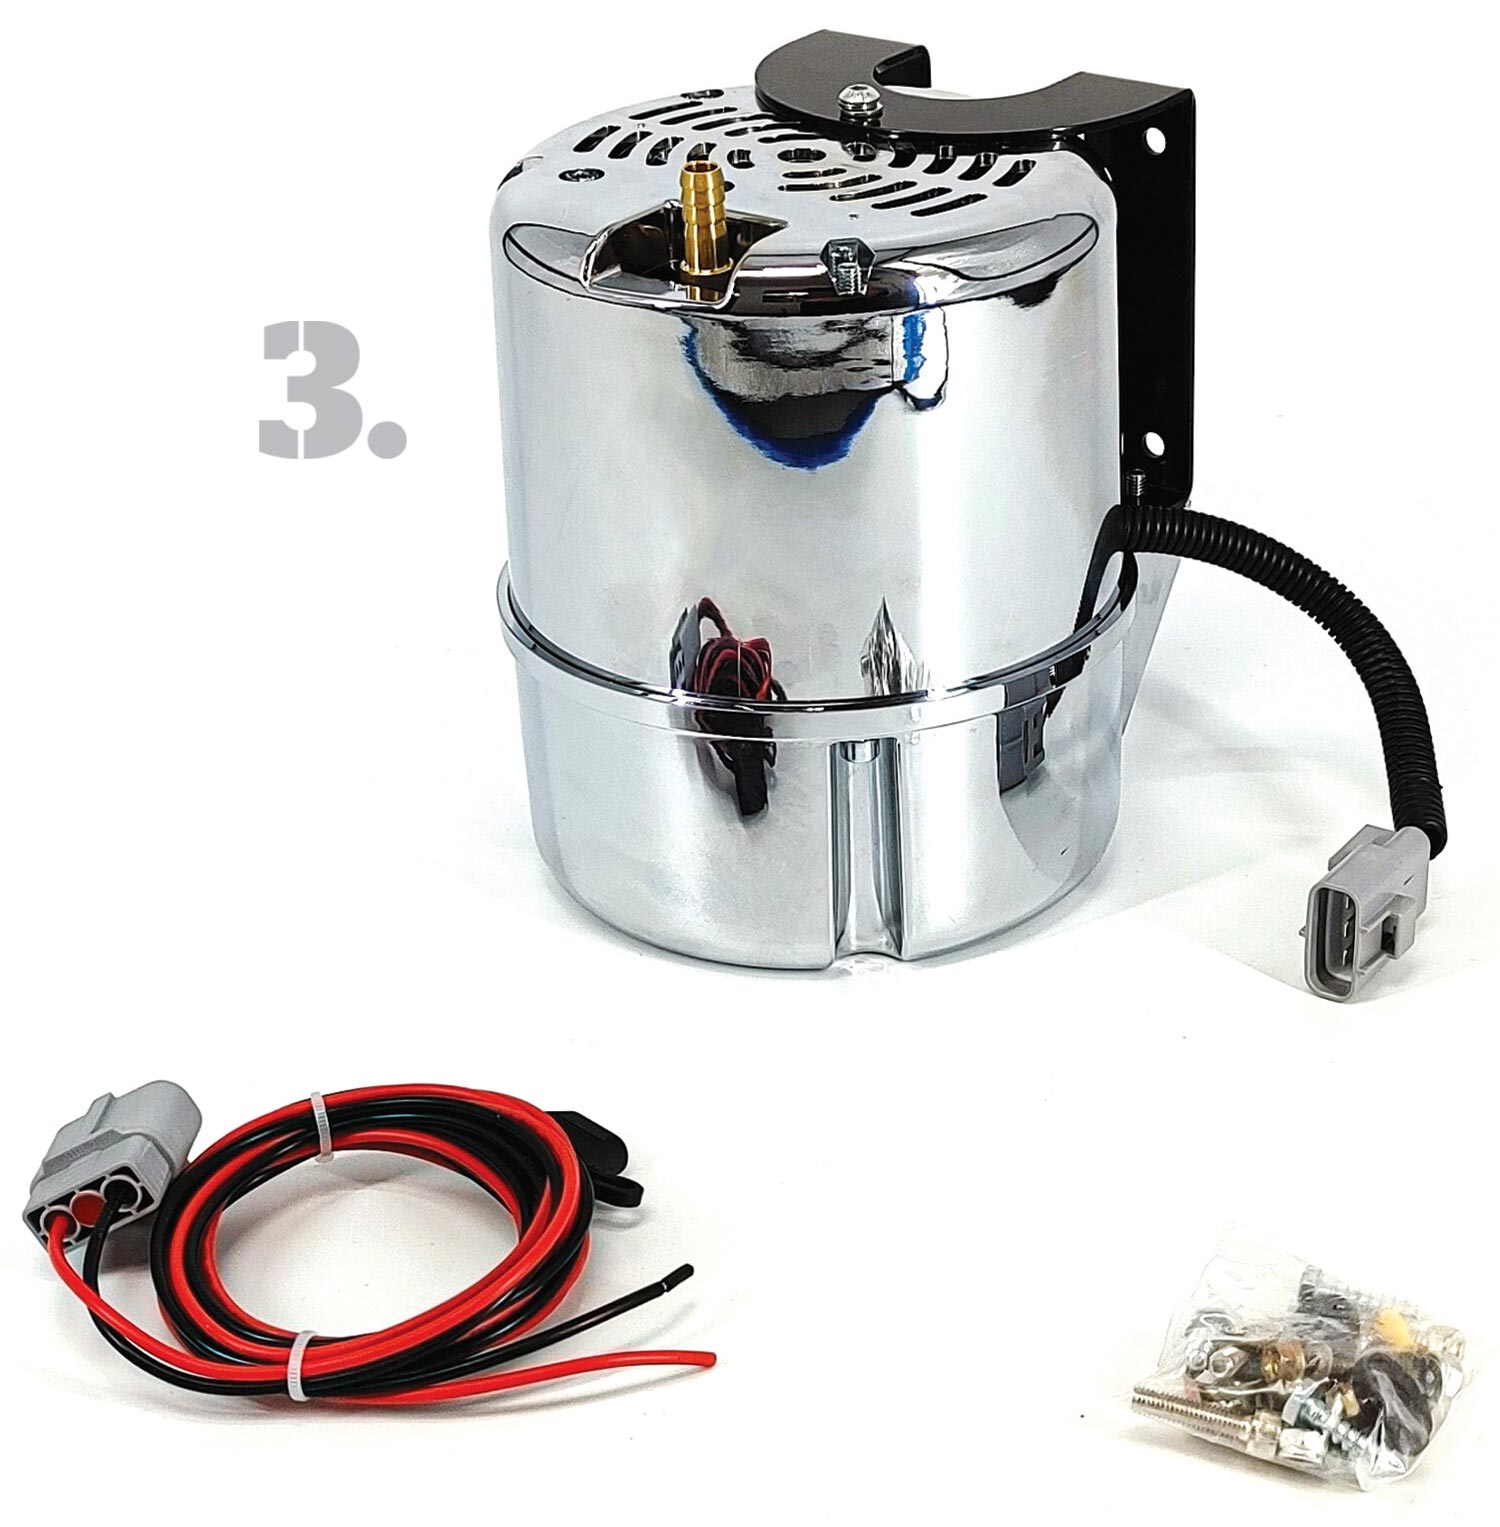 3. Granatelli Motor Sports 12V electric vacuum pump kit